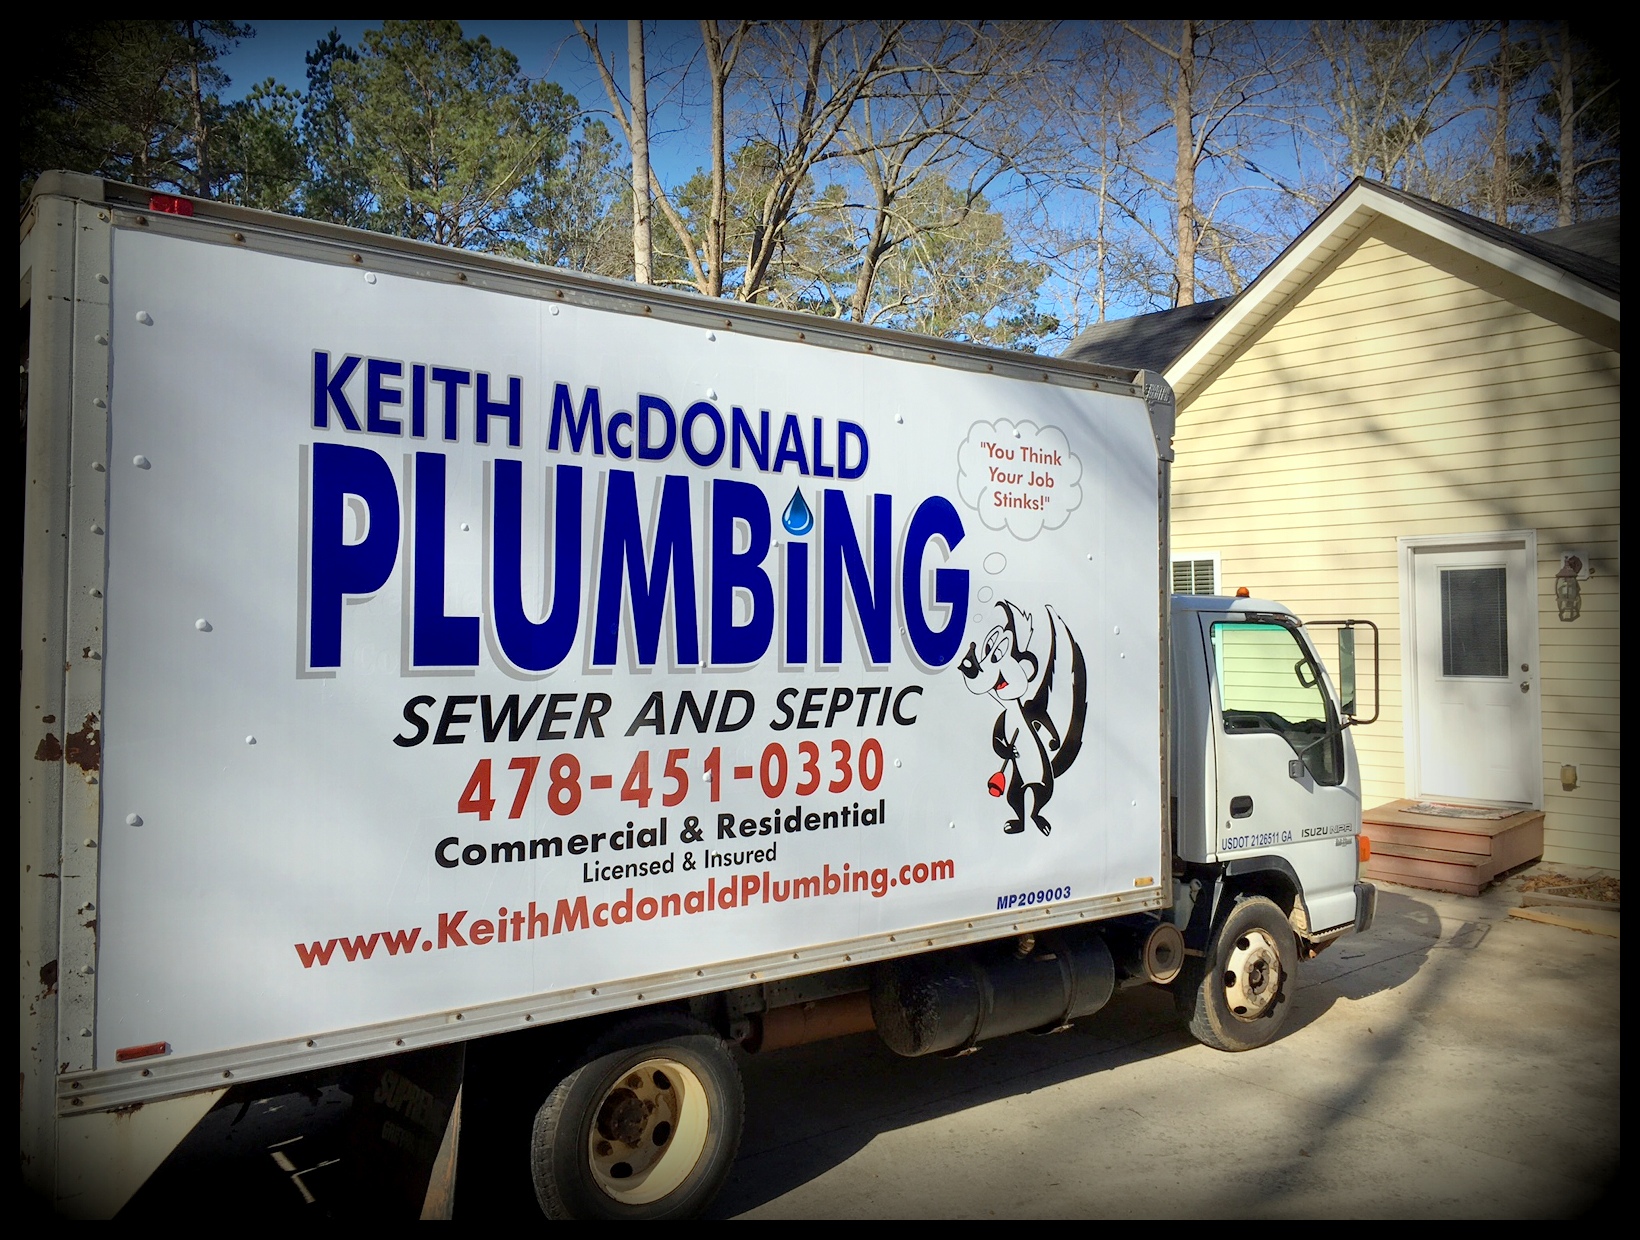 Keith McDonald Plumbing Sewer & Septic